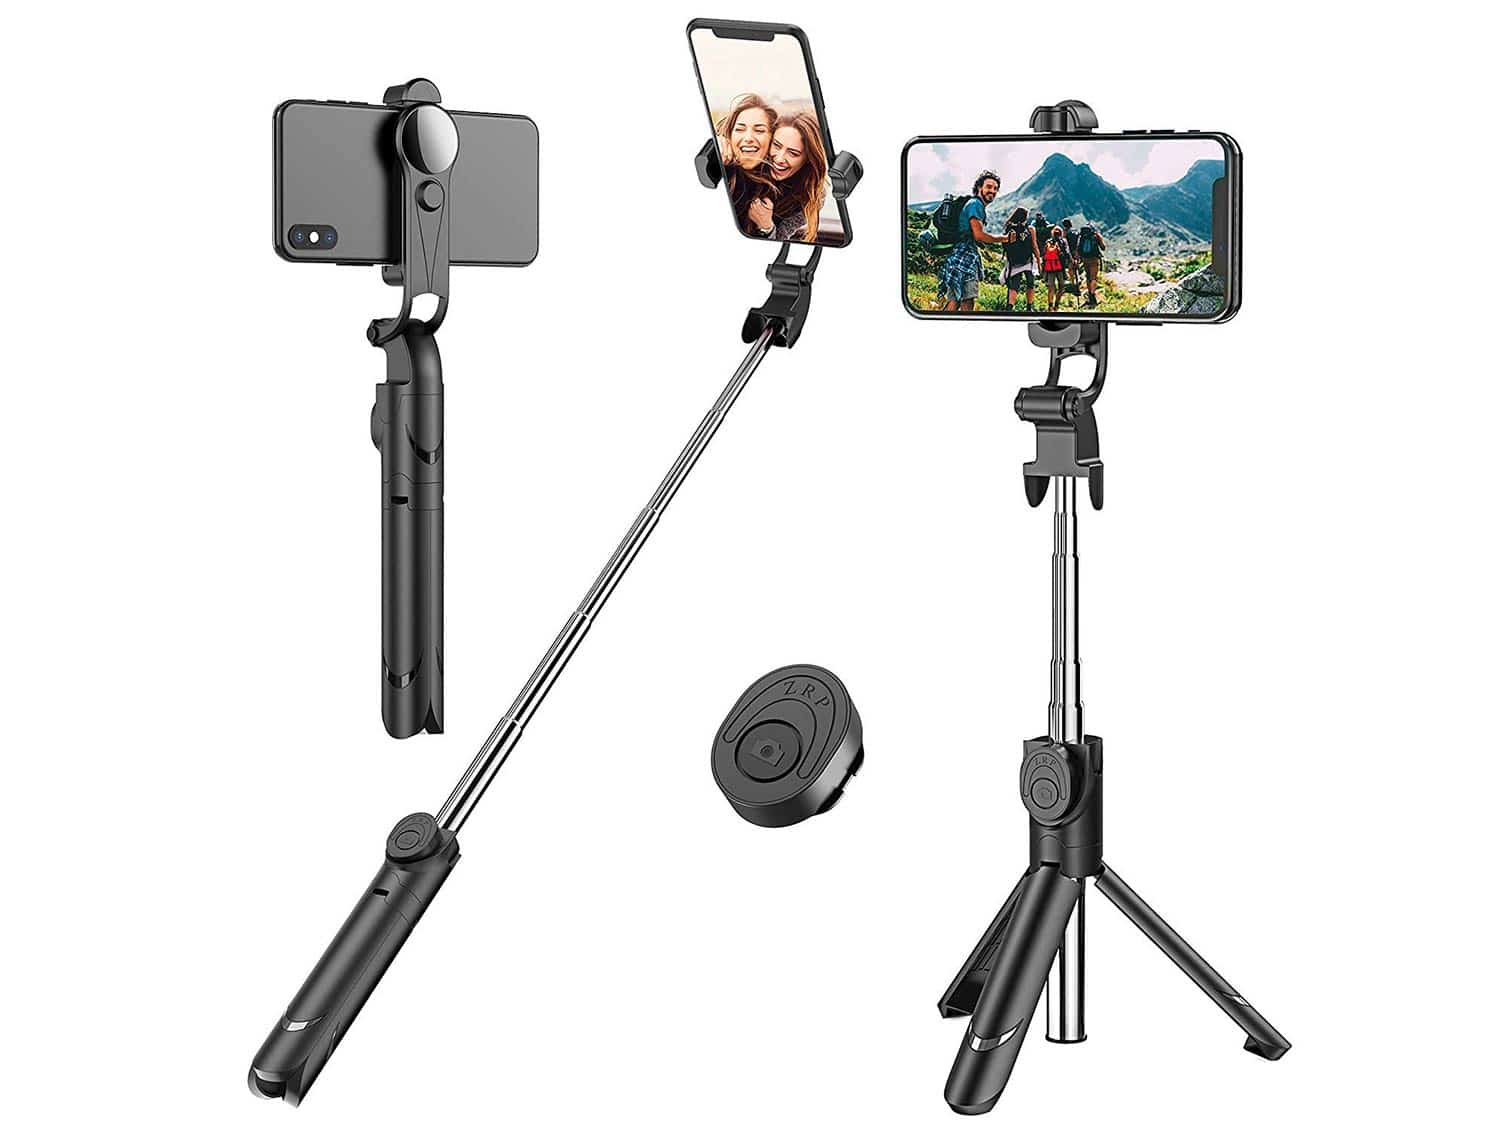 Dual selfie stick and tripod